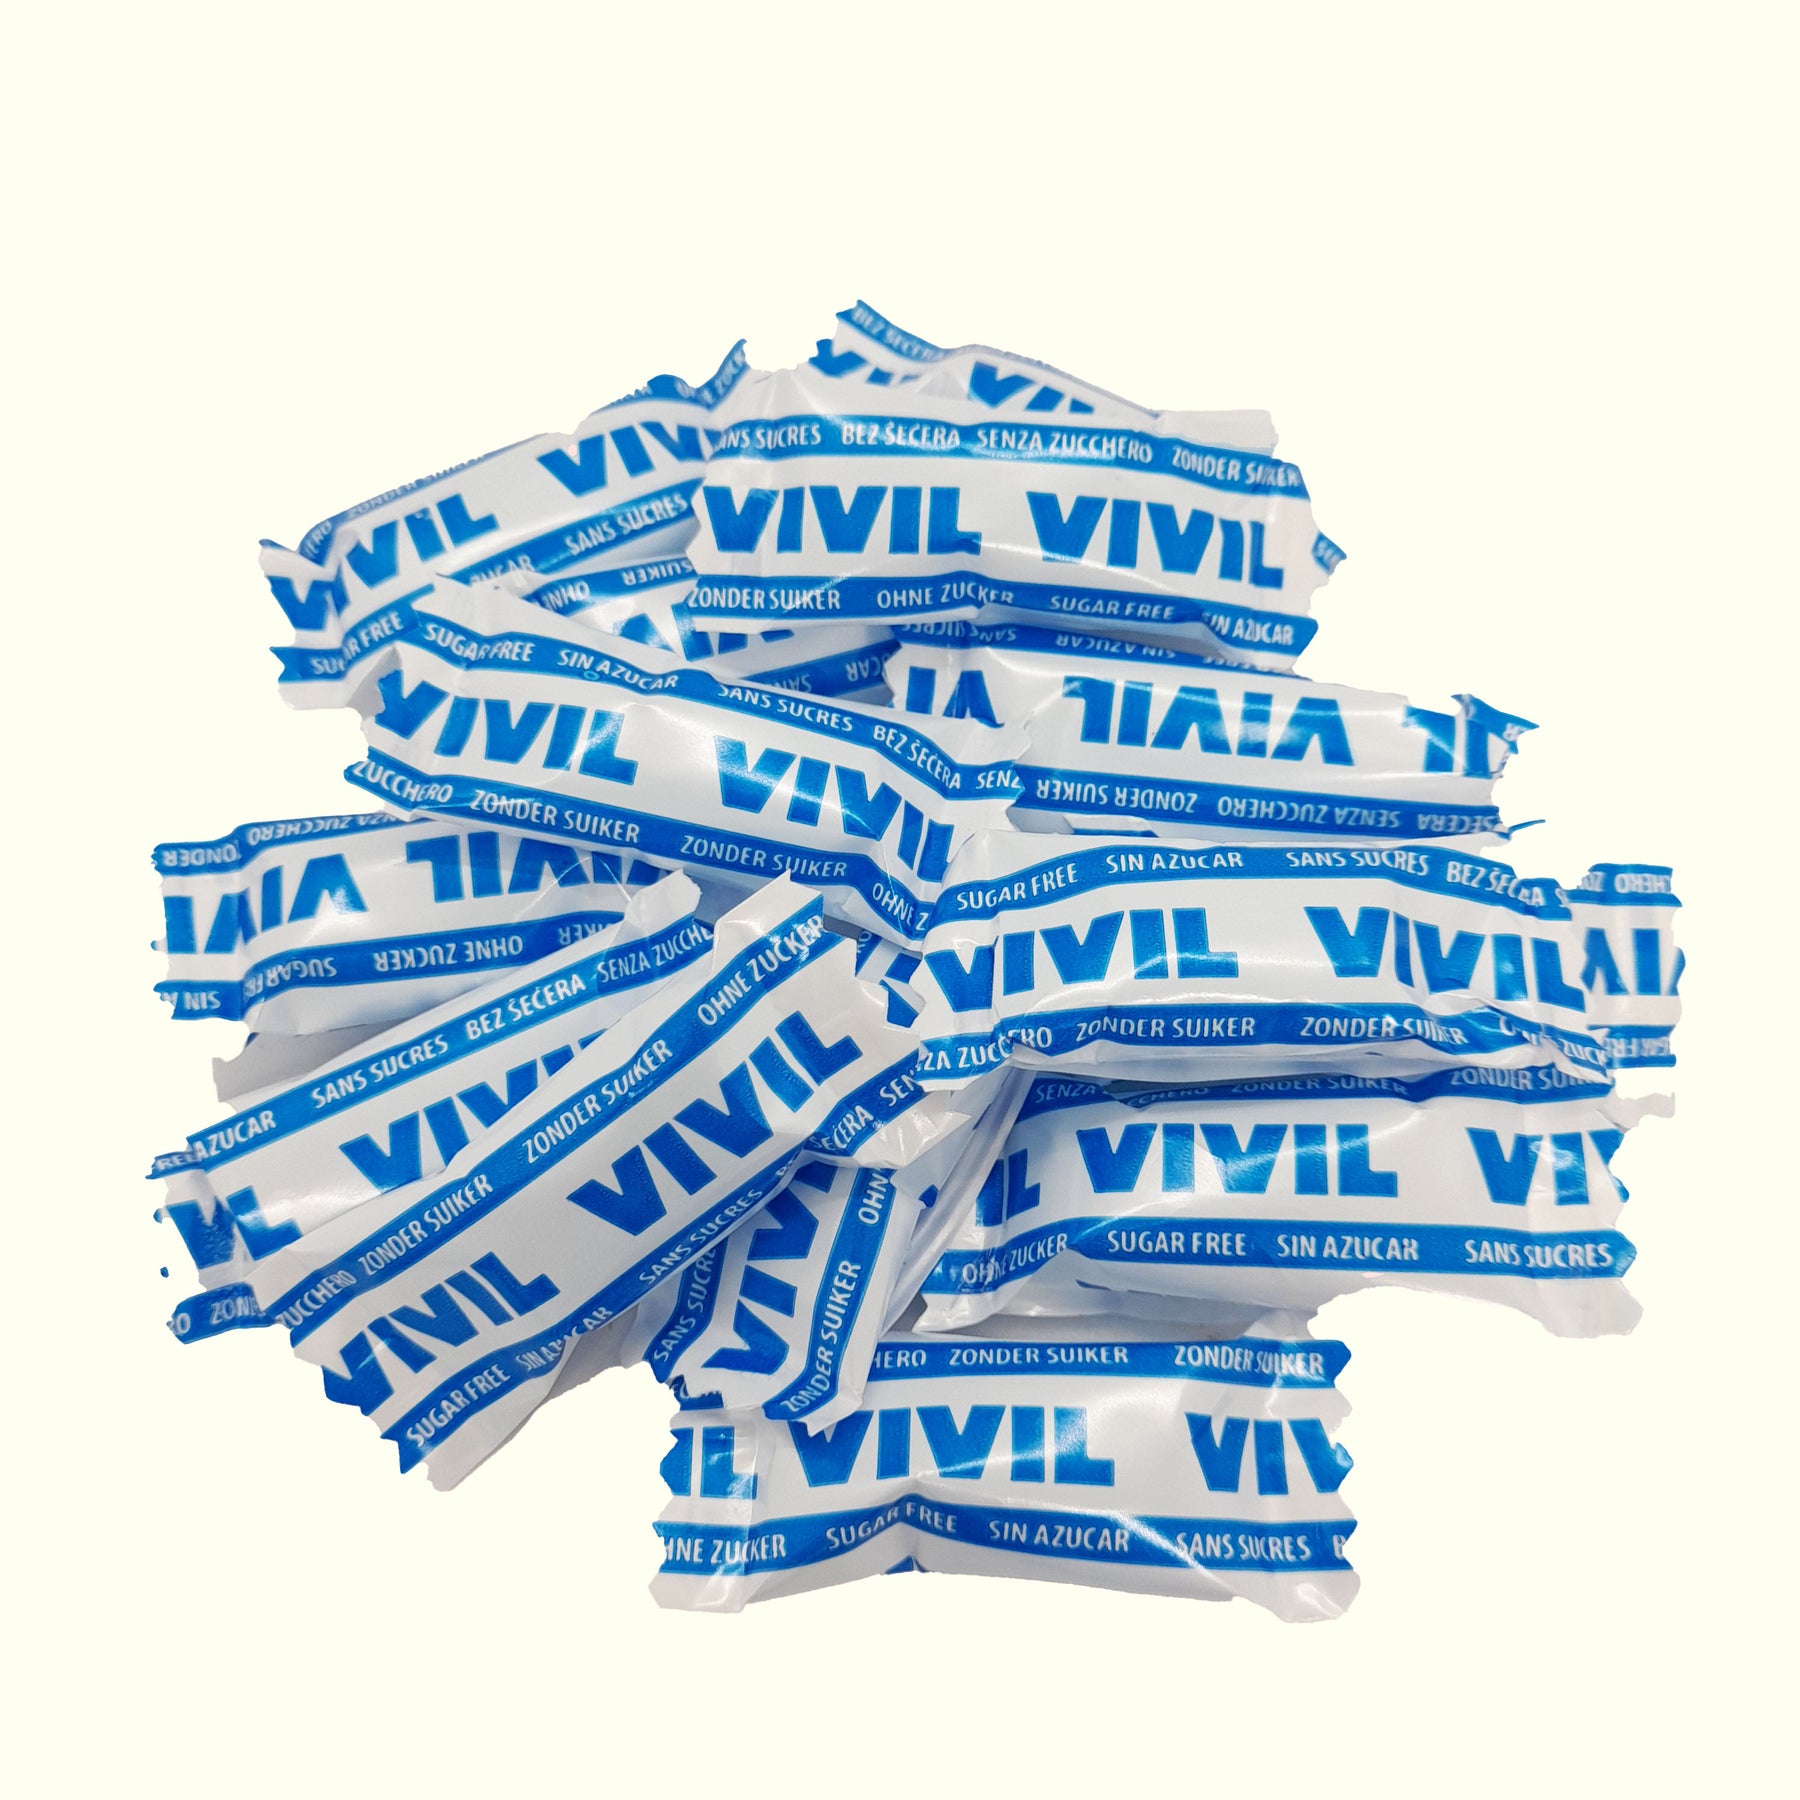 Vivil Extra Stark Halsbonbons zuckerfrei - 120g